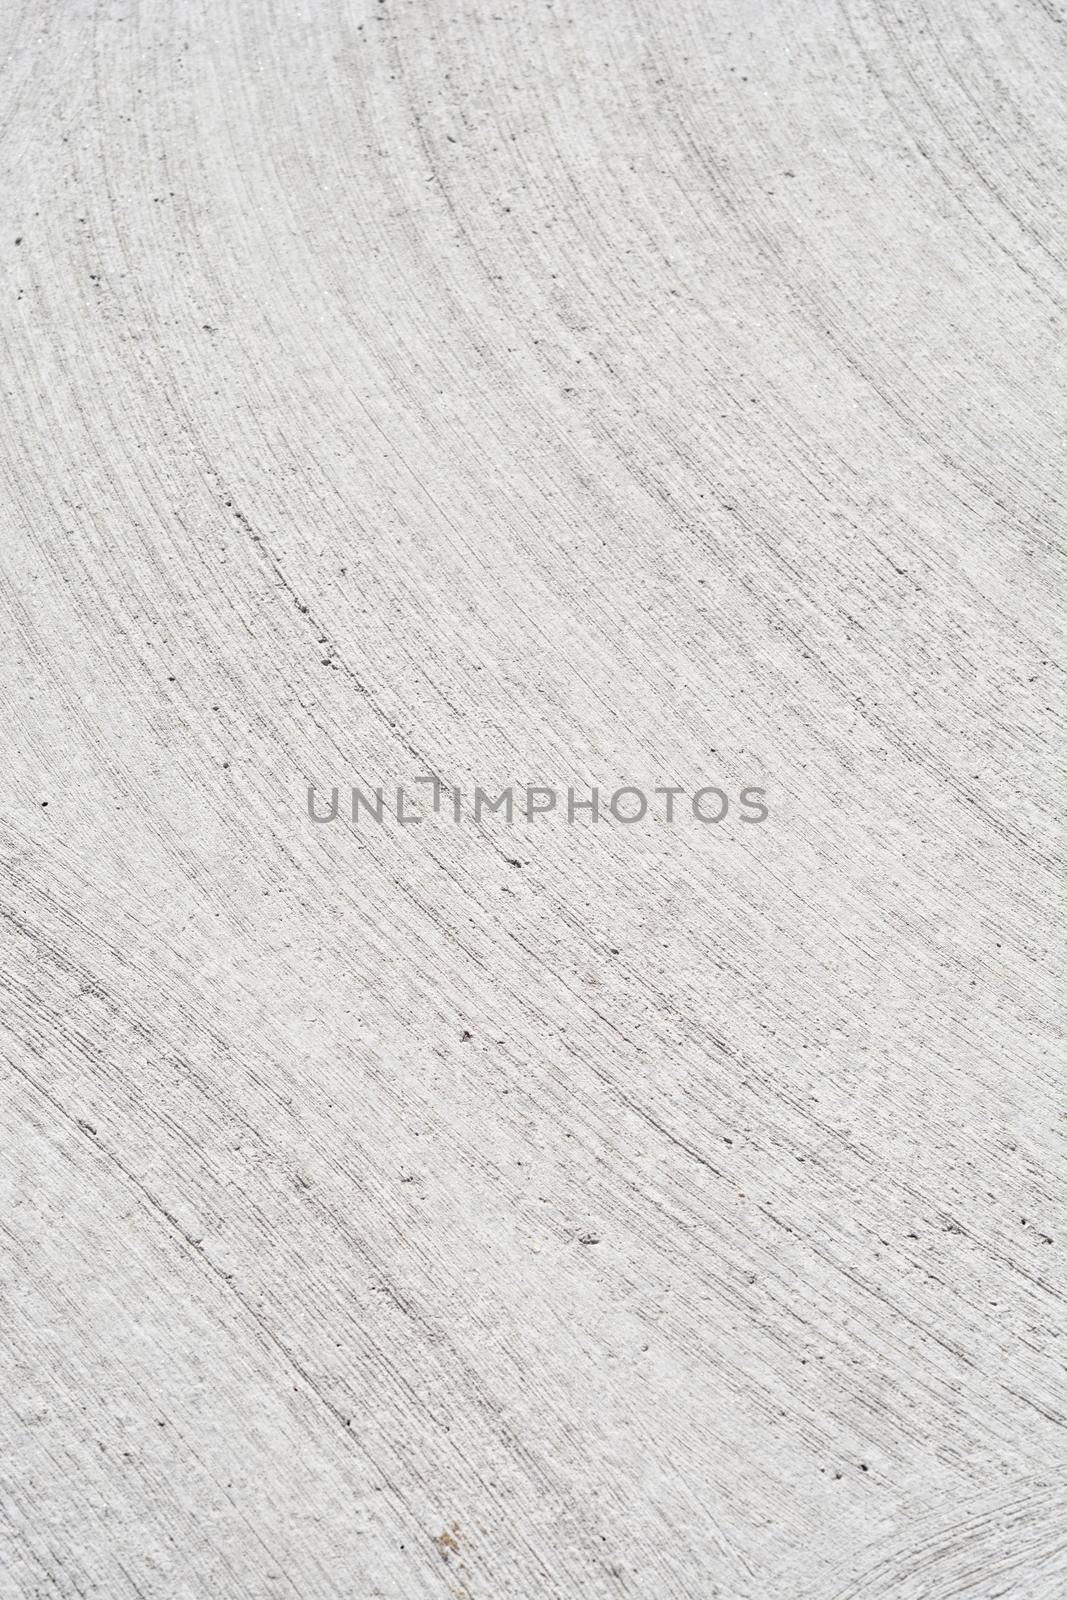 Detail of a white rough concrete floor